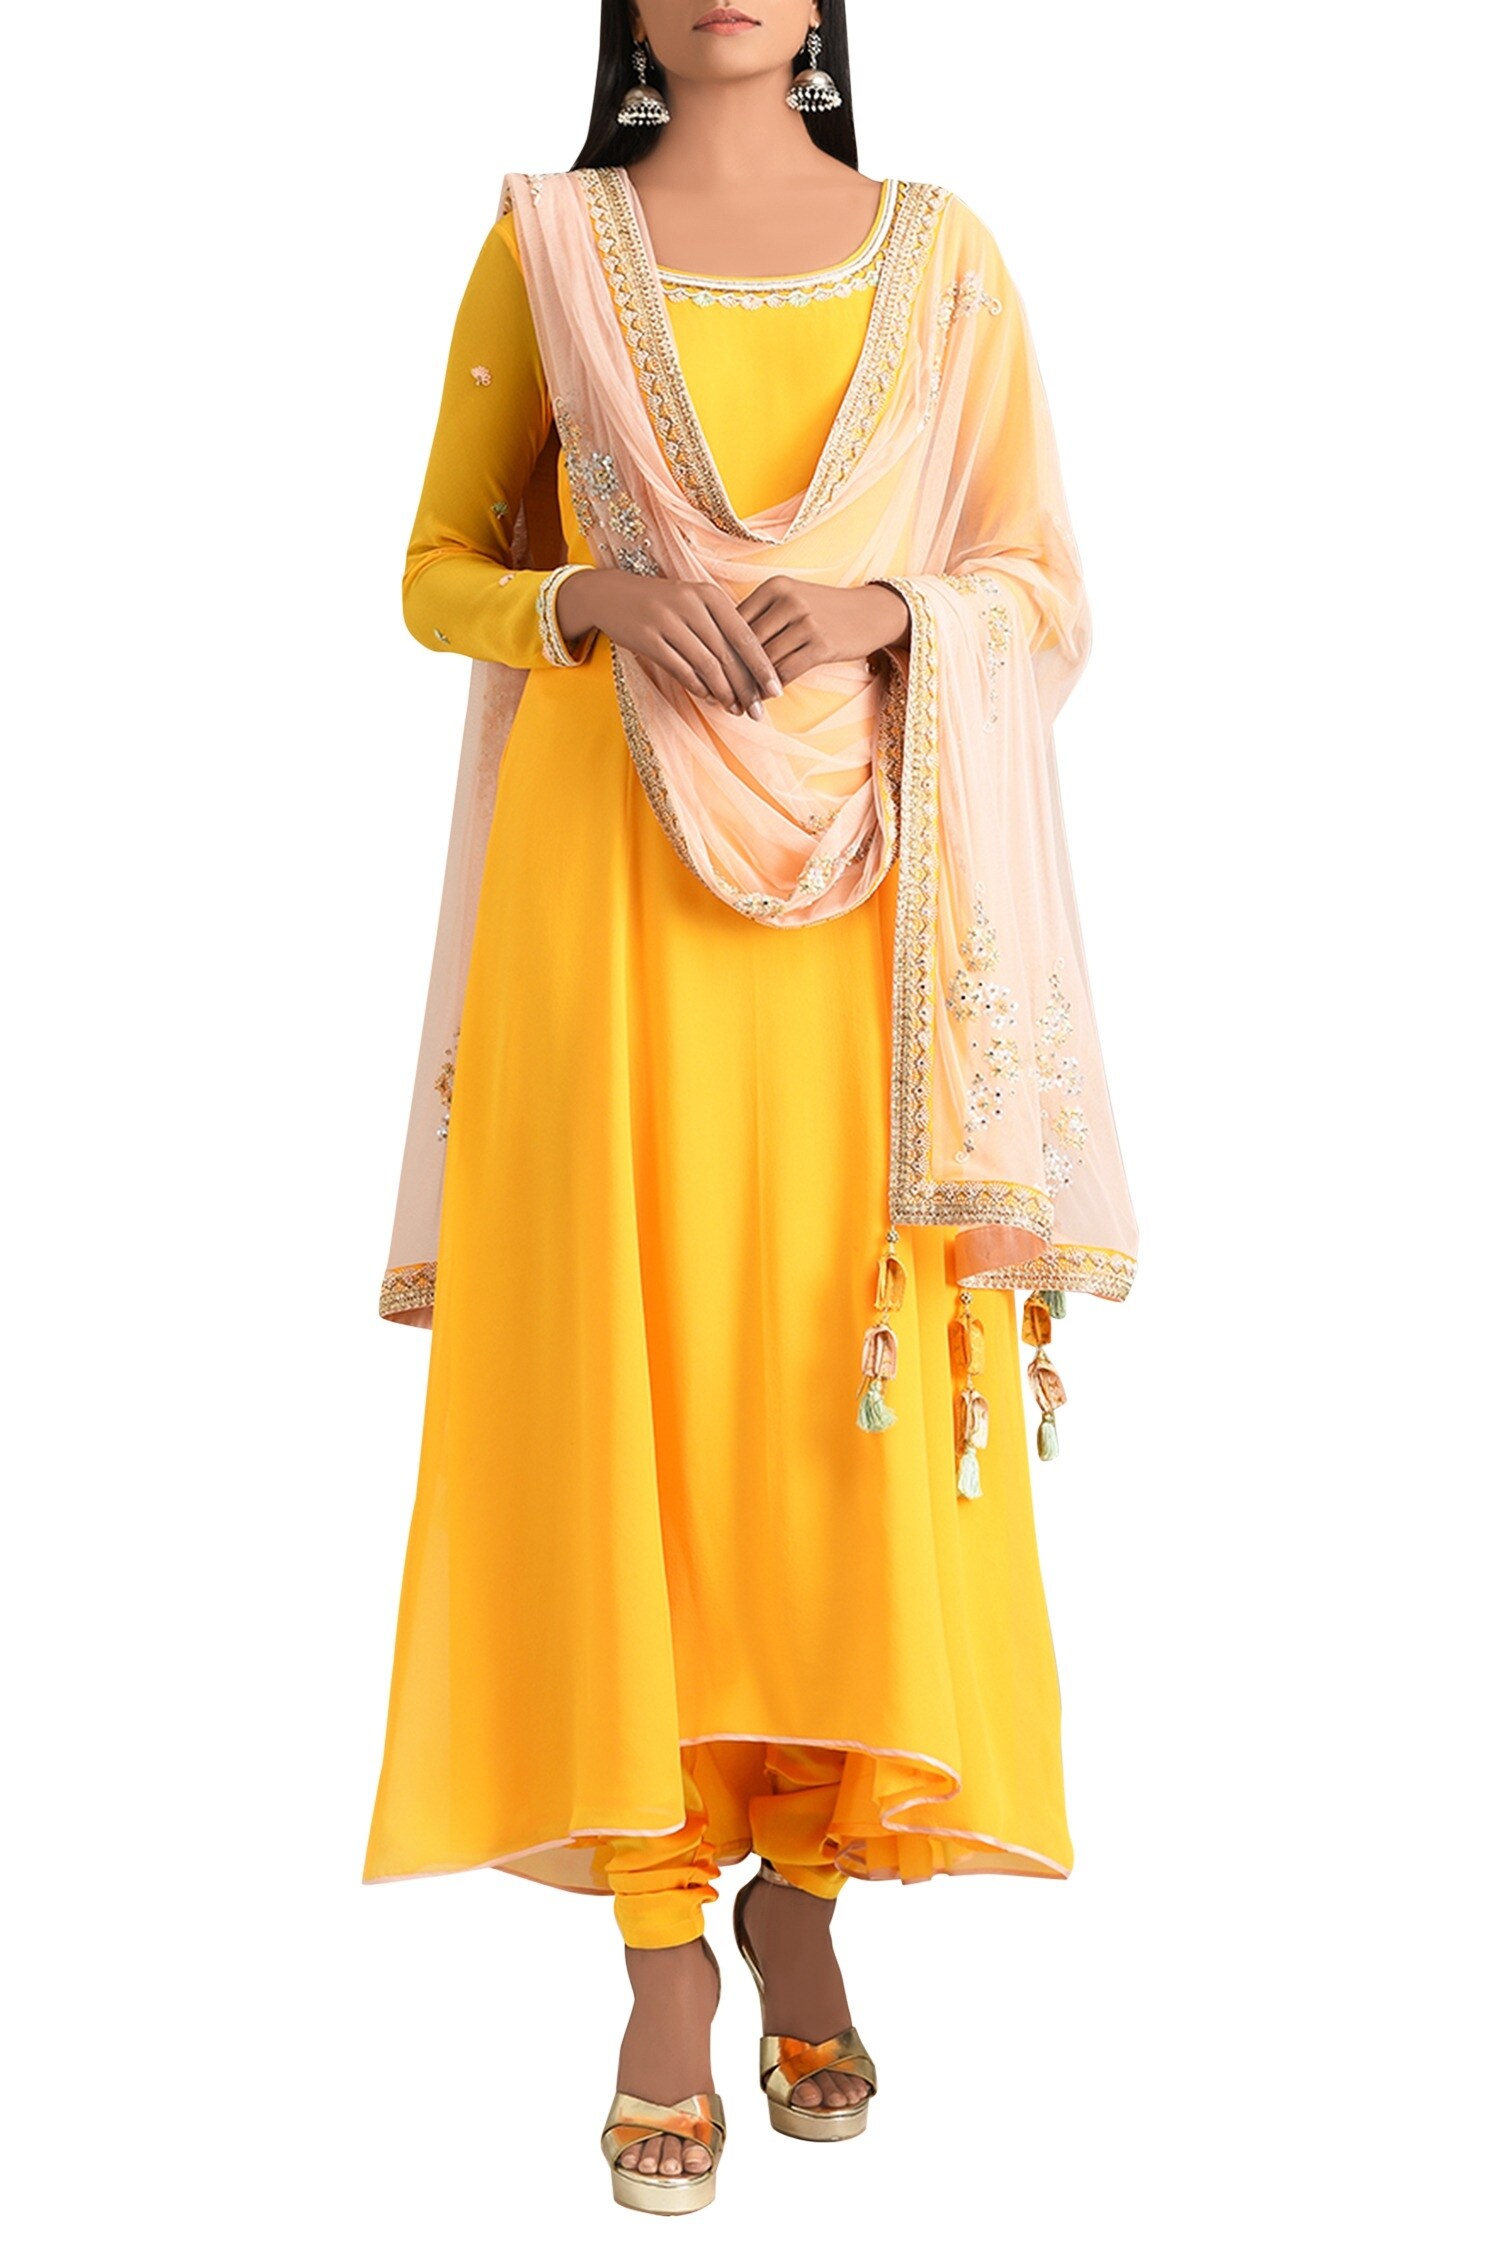 MADZIN Yellow Round Embroidered Anarkali Set For Women